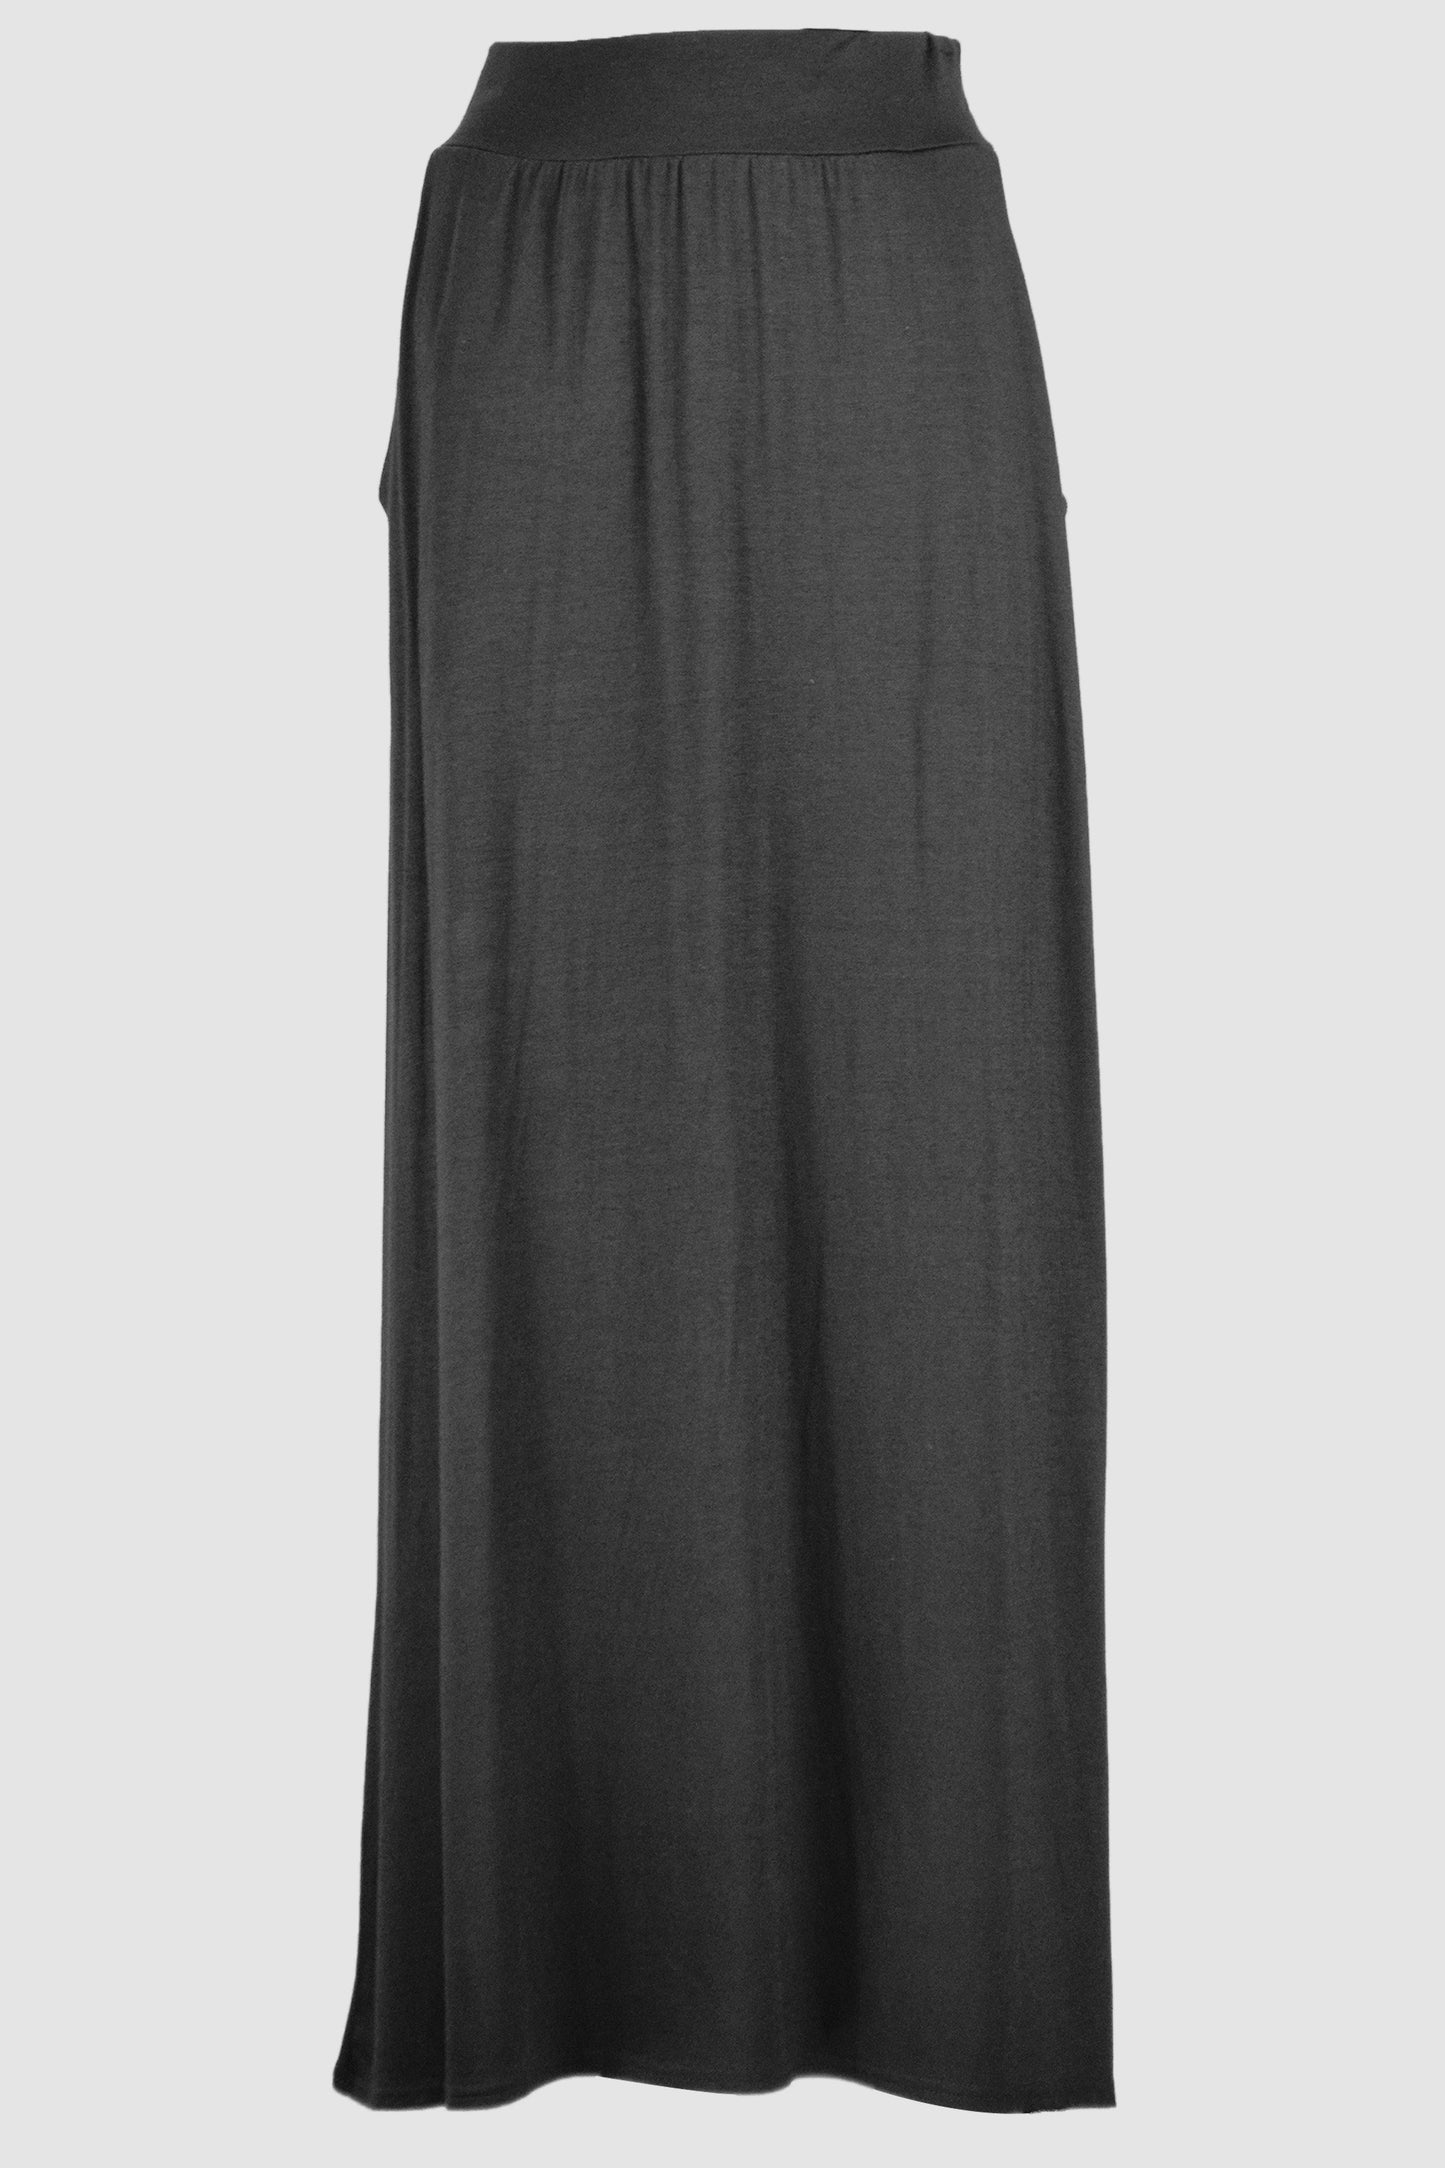 Black Jersey Skirt With Pockets-almanaar Islamic Store